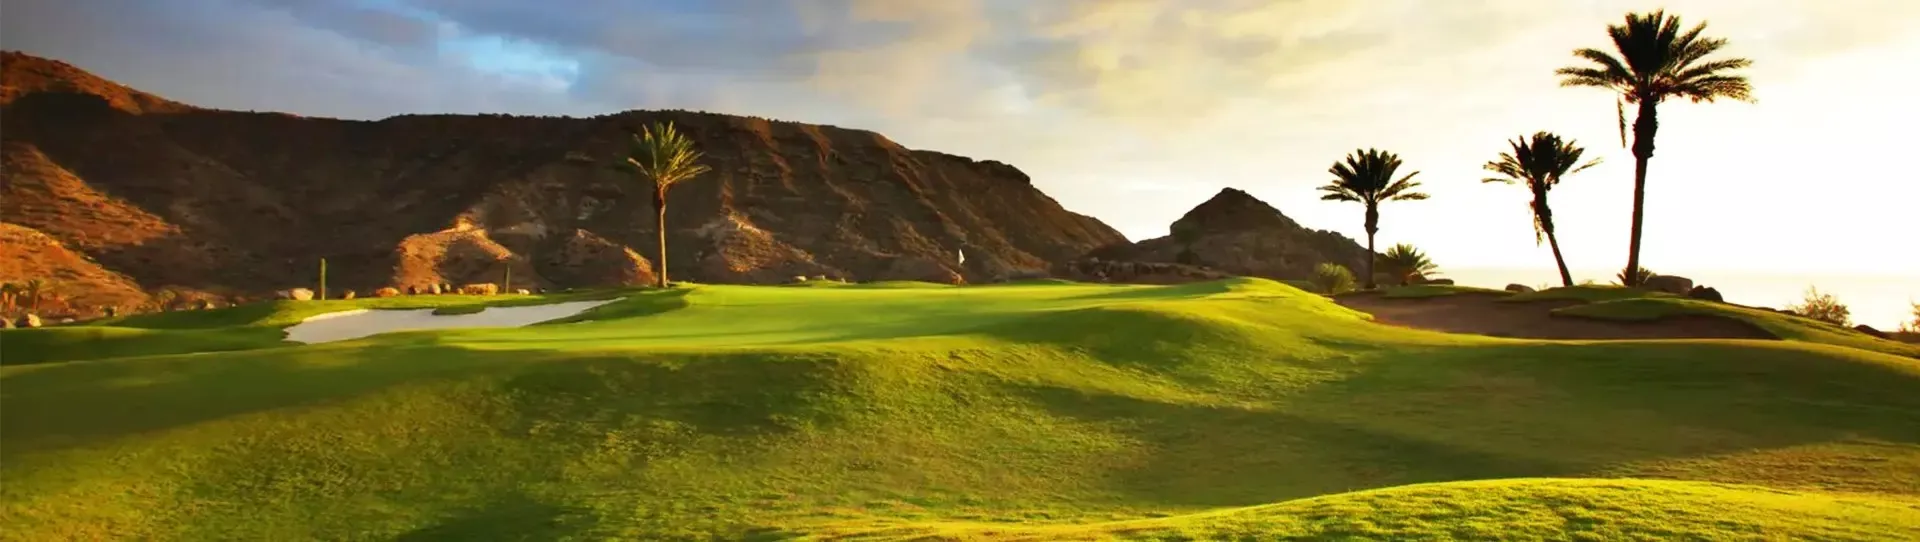 Spain golf courses - Anfi Tauro Golf Course - Photo 5